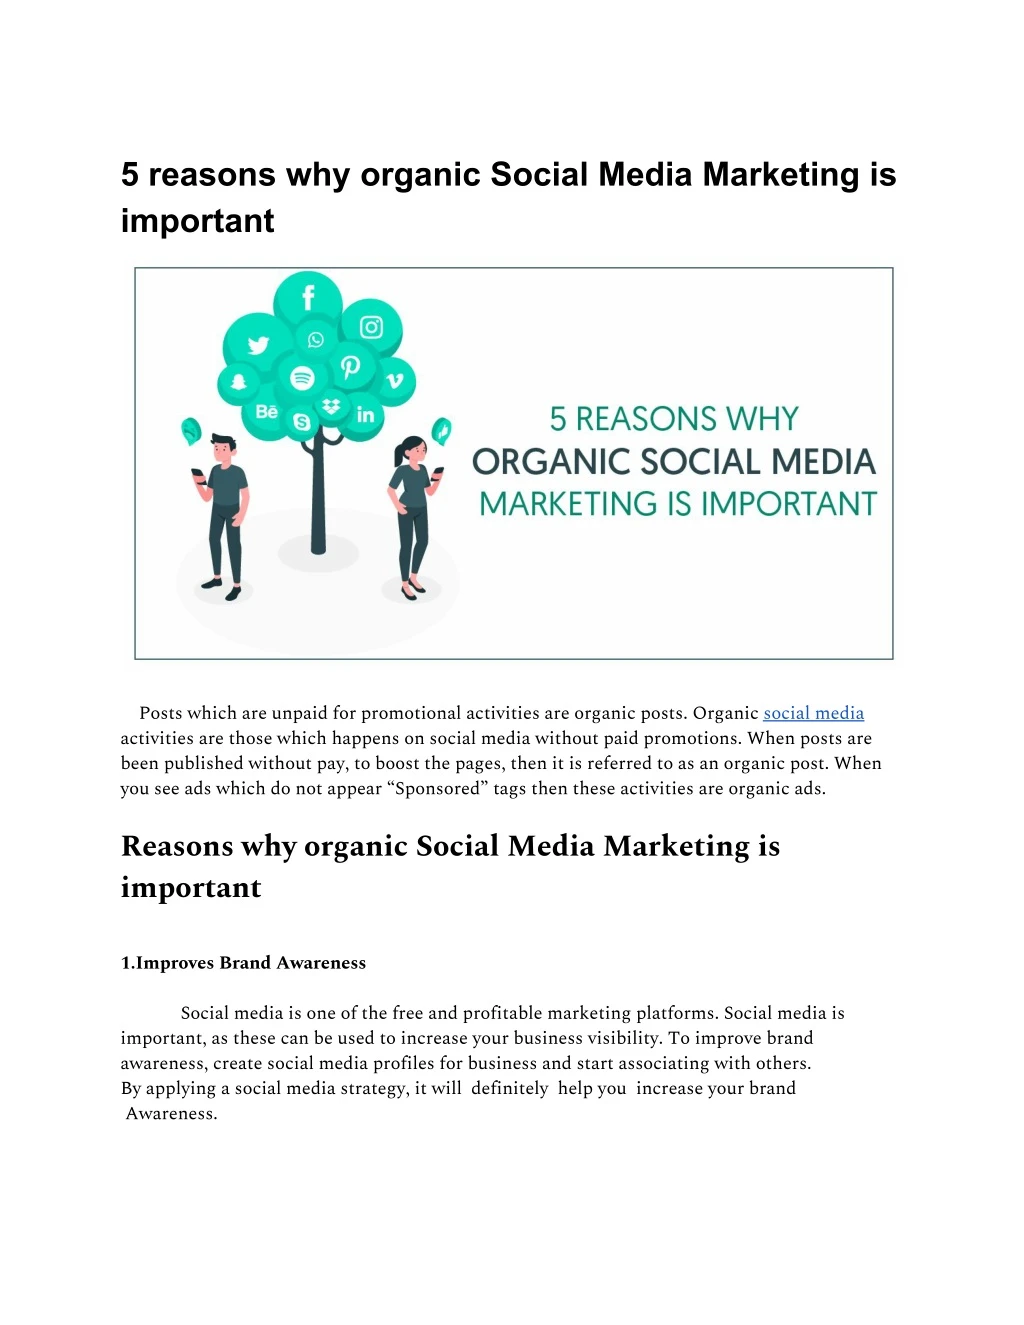 5 reasons why organic social media marketing